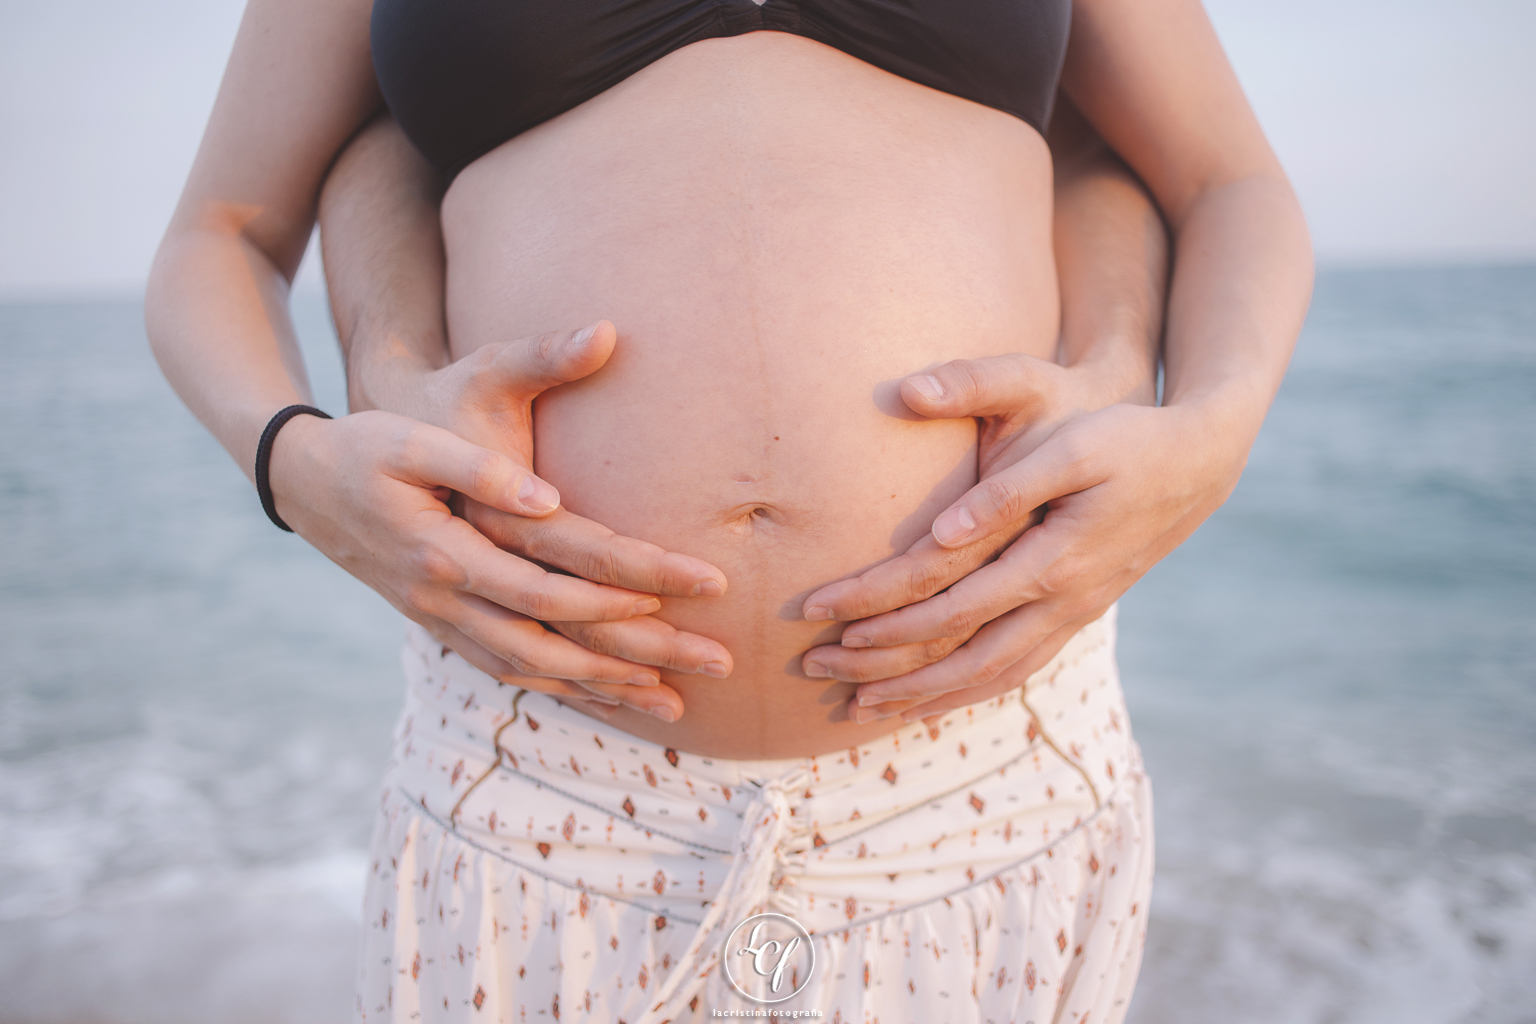 fotógrafo de embarazo :: fotógrafa embarazo :: fotografía embarazada :: fotografía embarazada en la playa :: fotografía embarazada barcelona